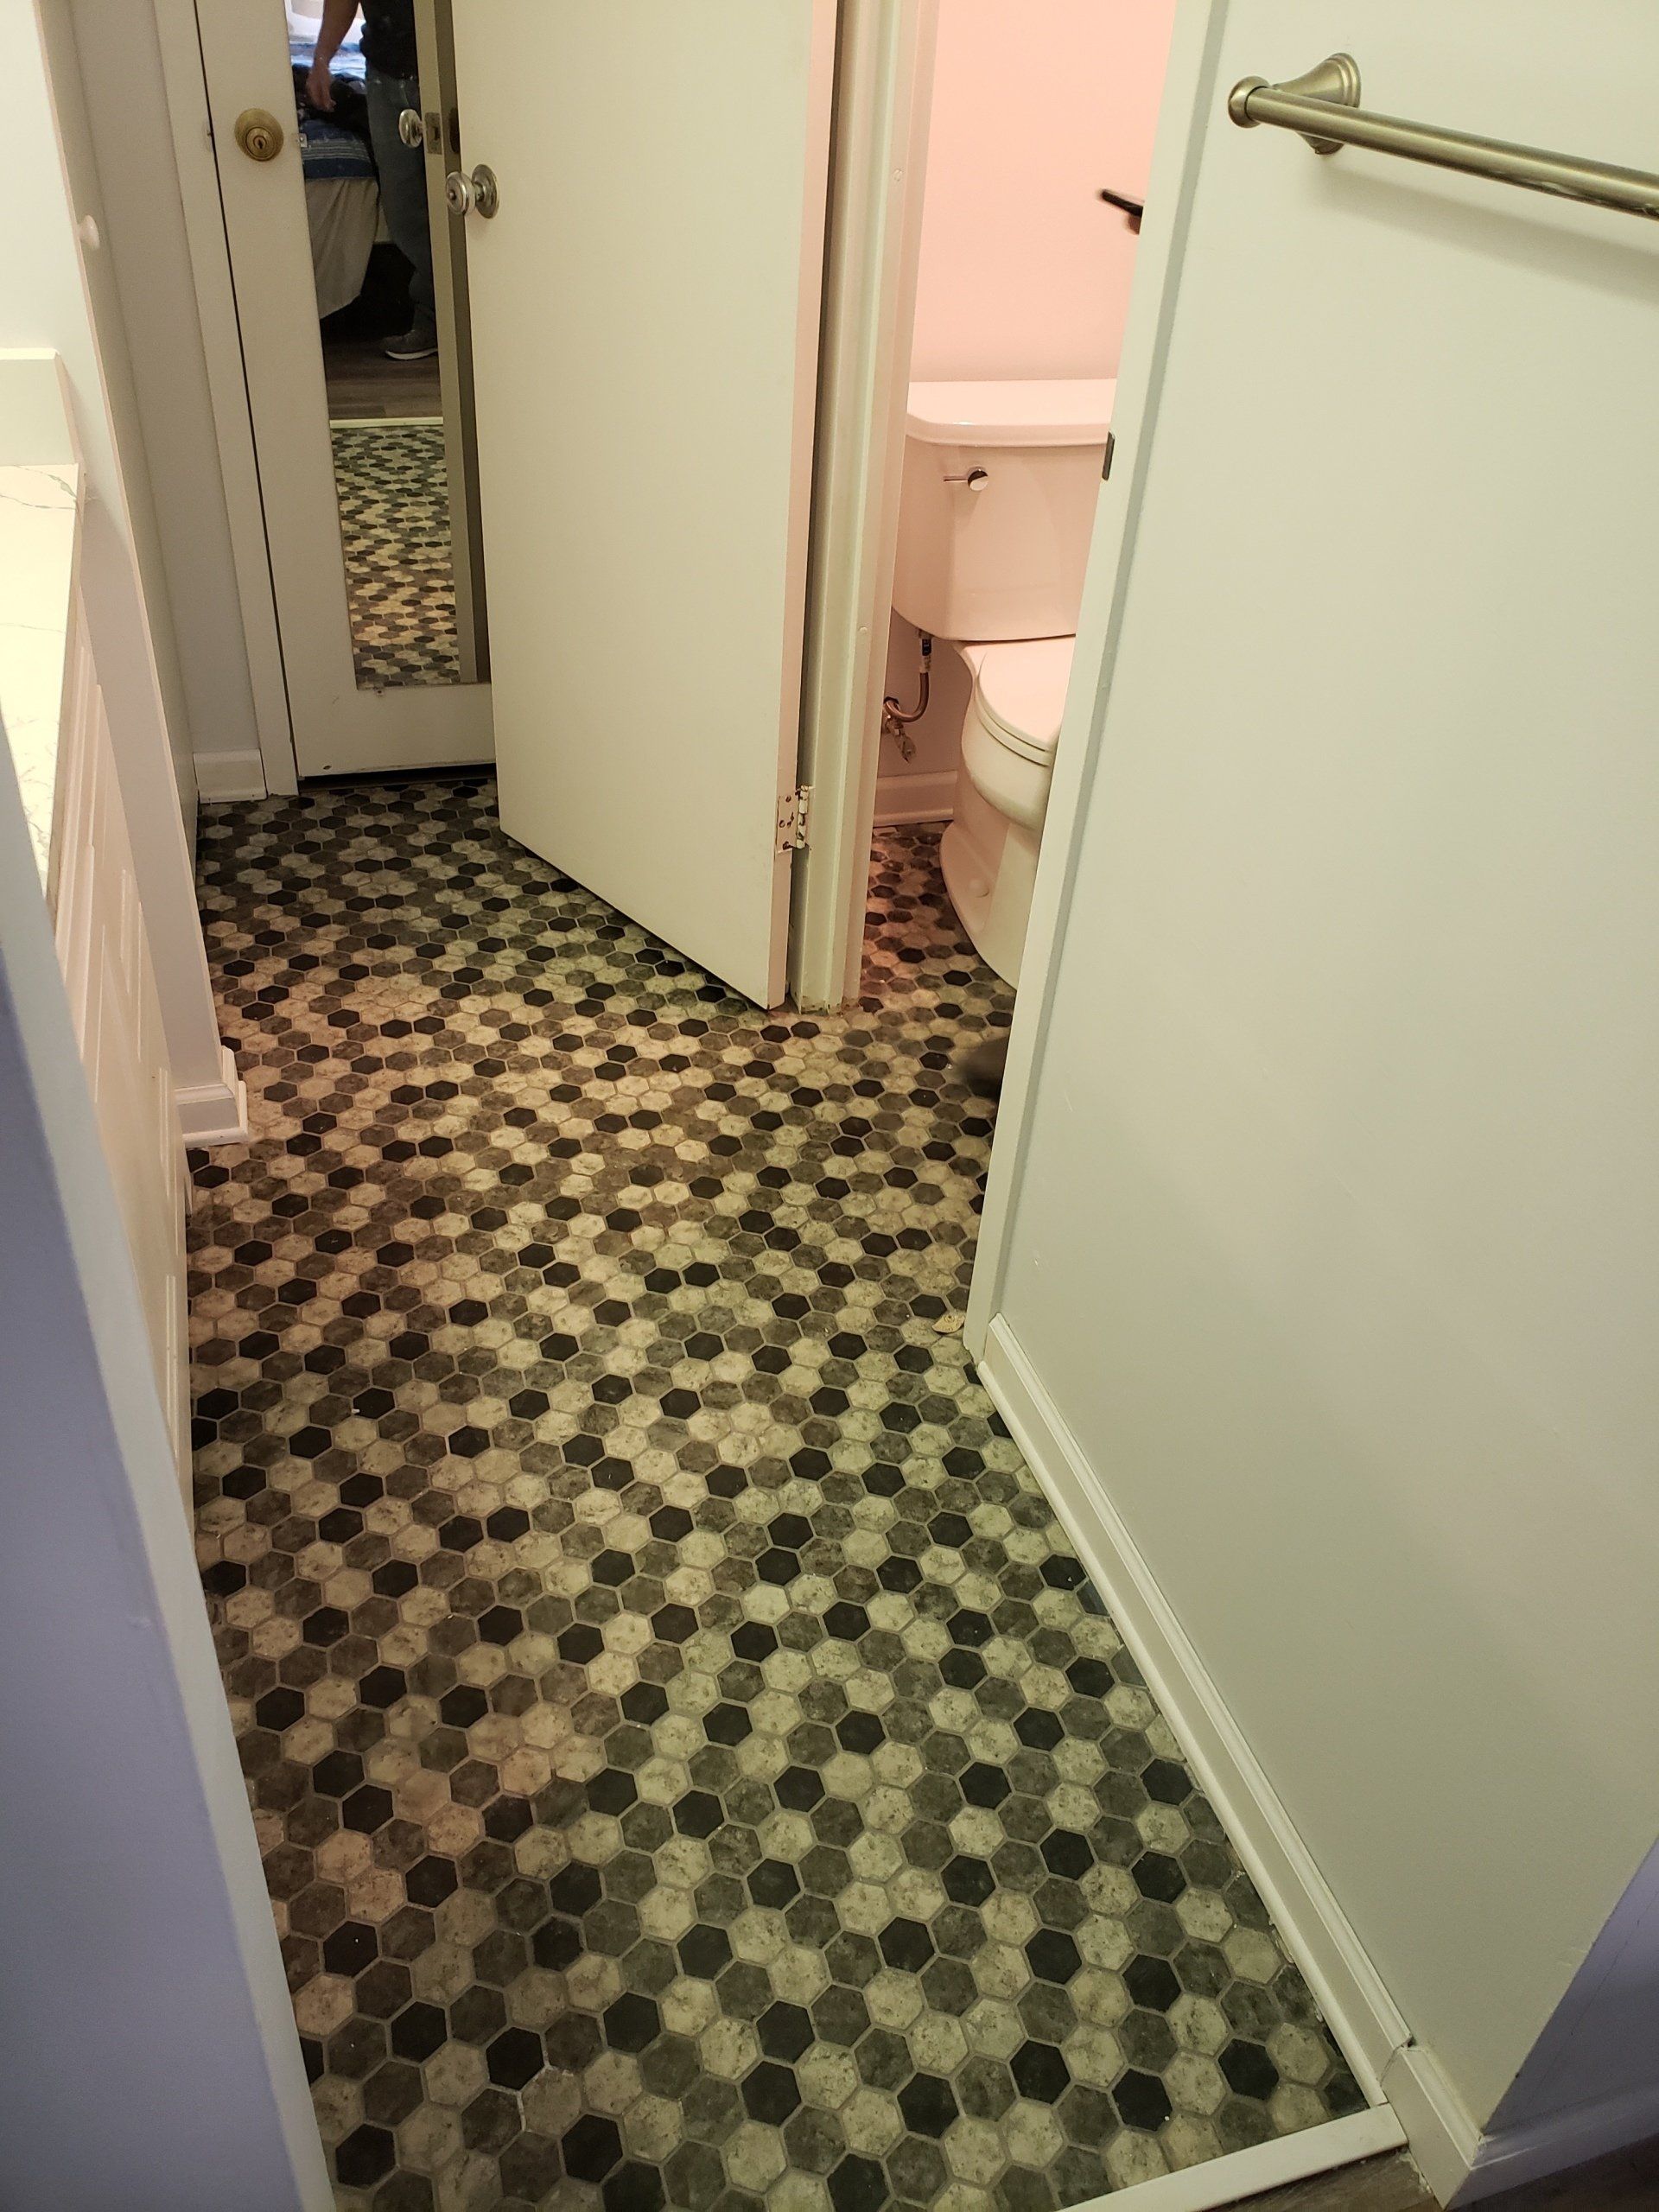 Jenkintown condo bathroom remodel close up of mosaic floor tiles.